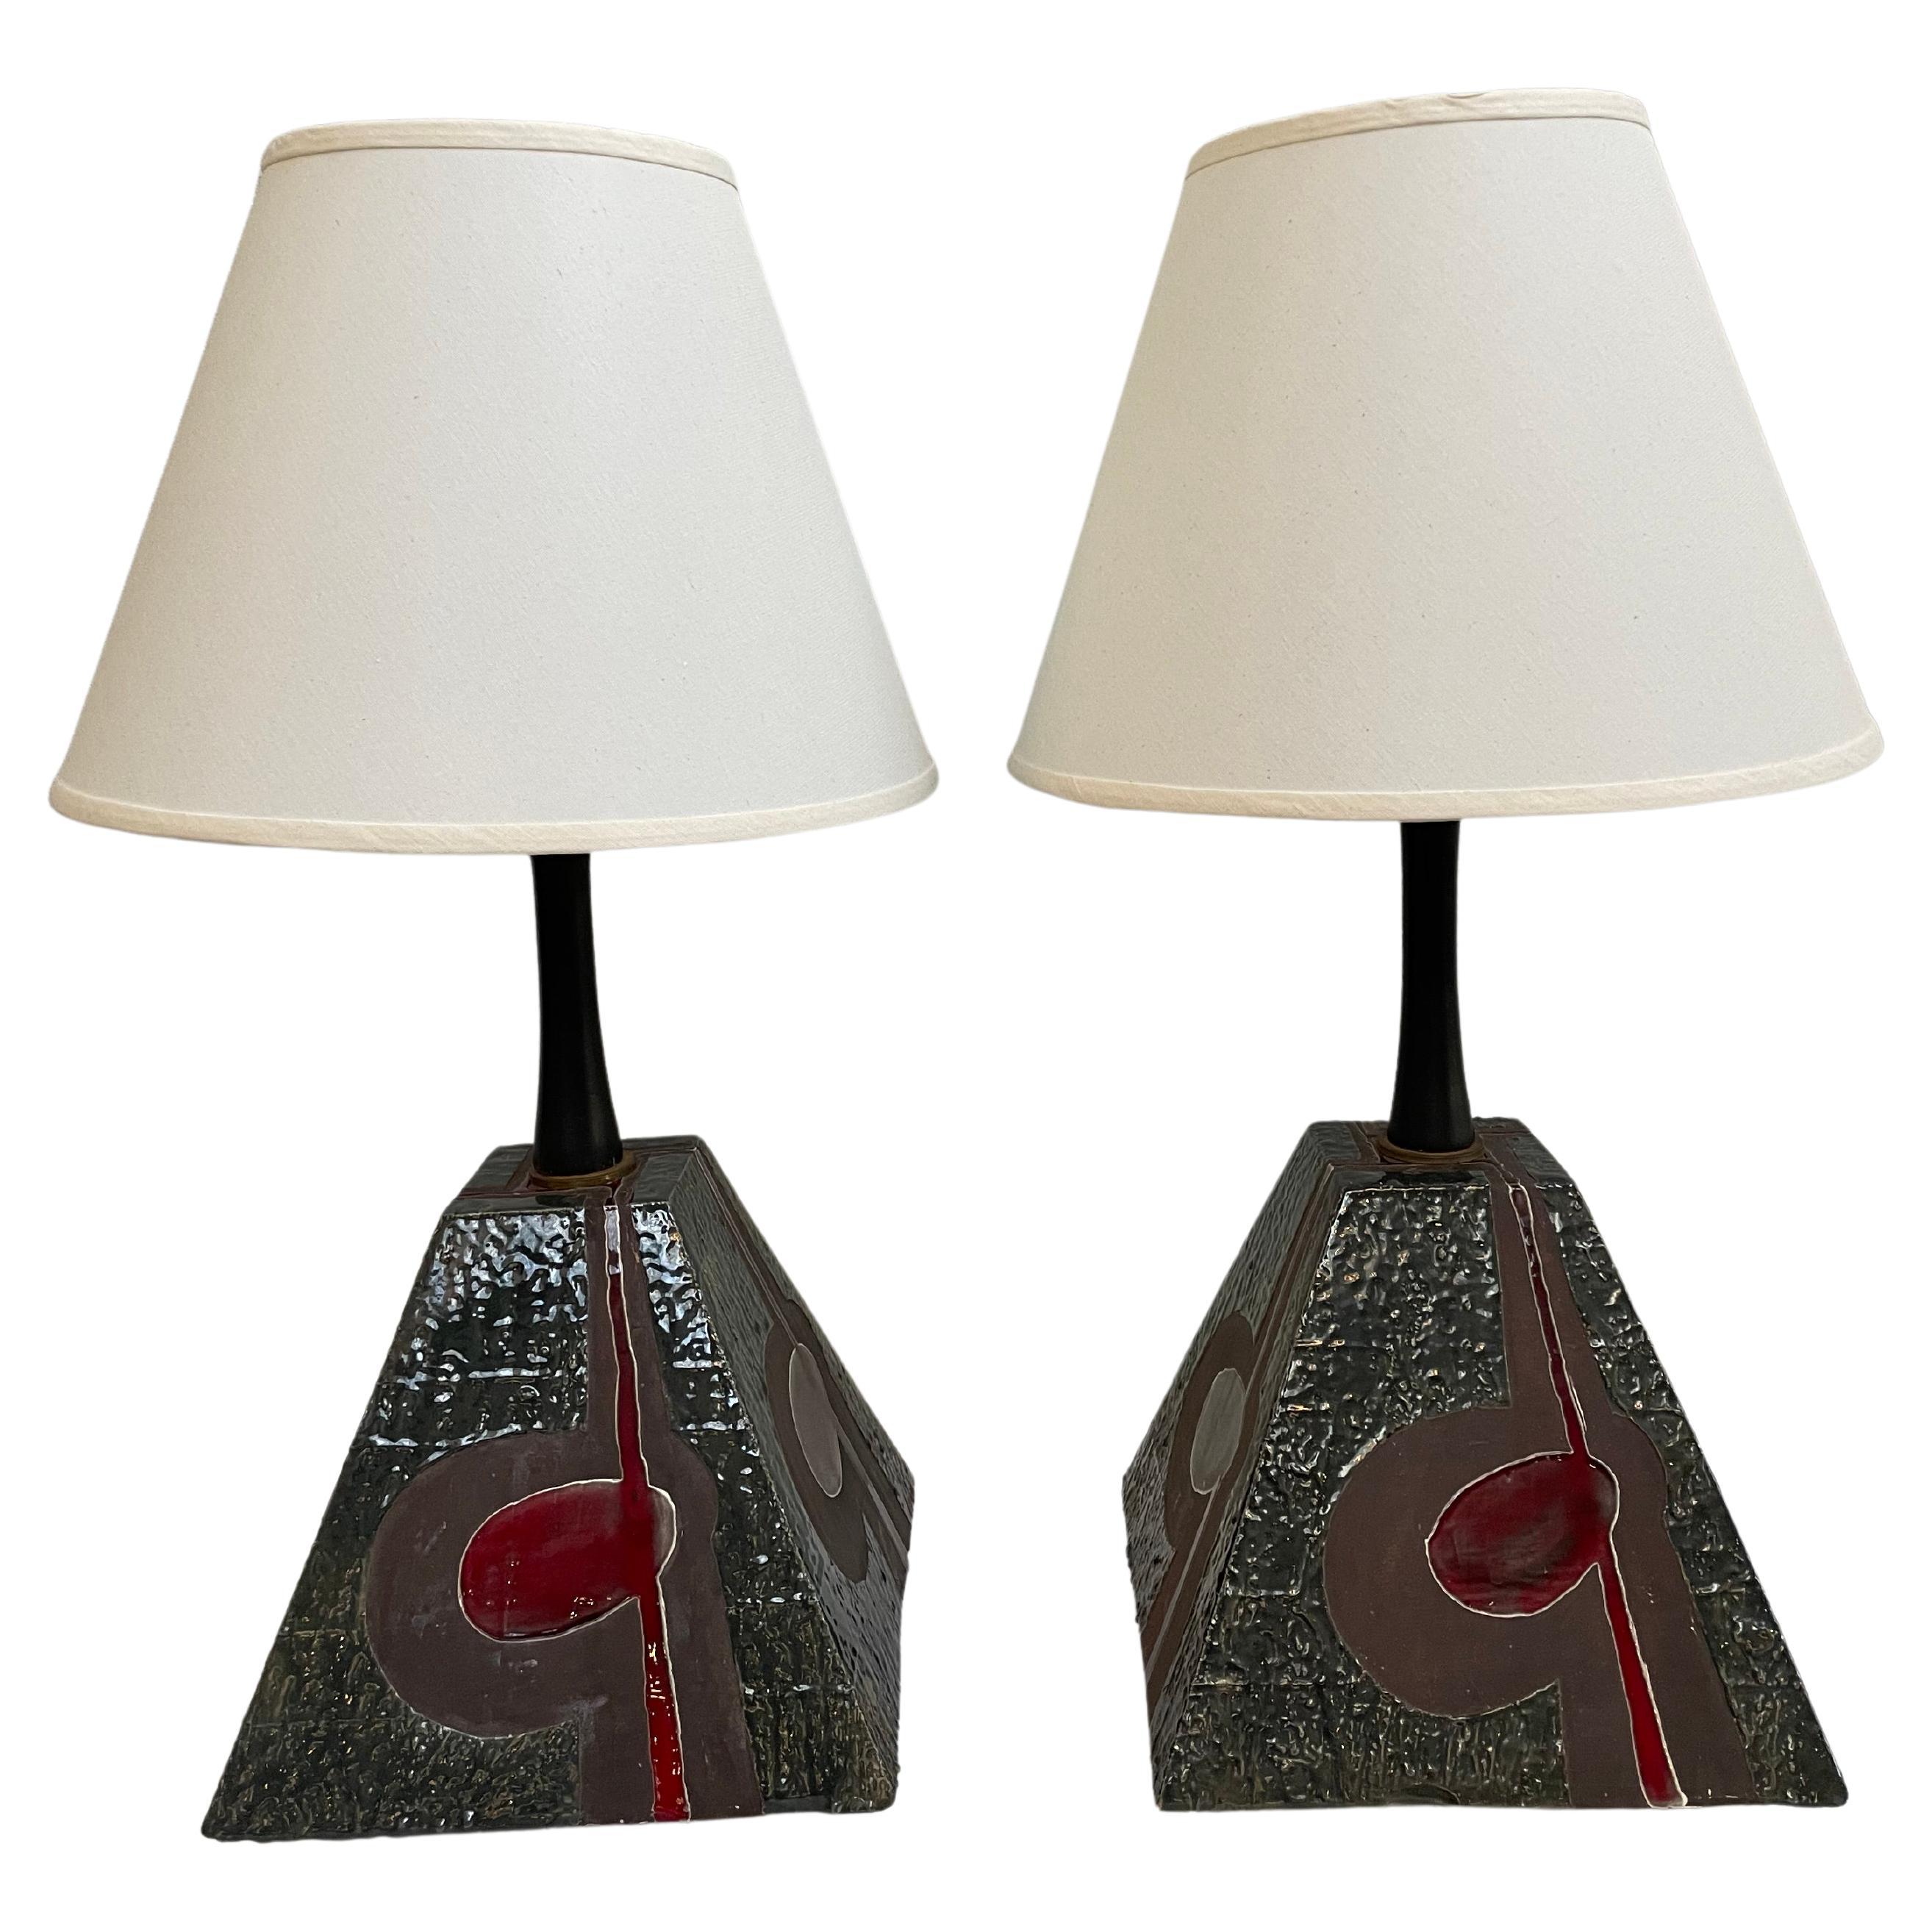 MCM Ceramic Brutalist Table Lamps, a Pair For Sale